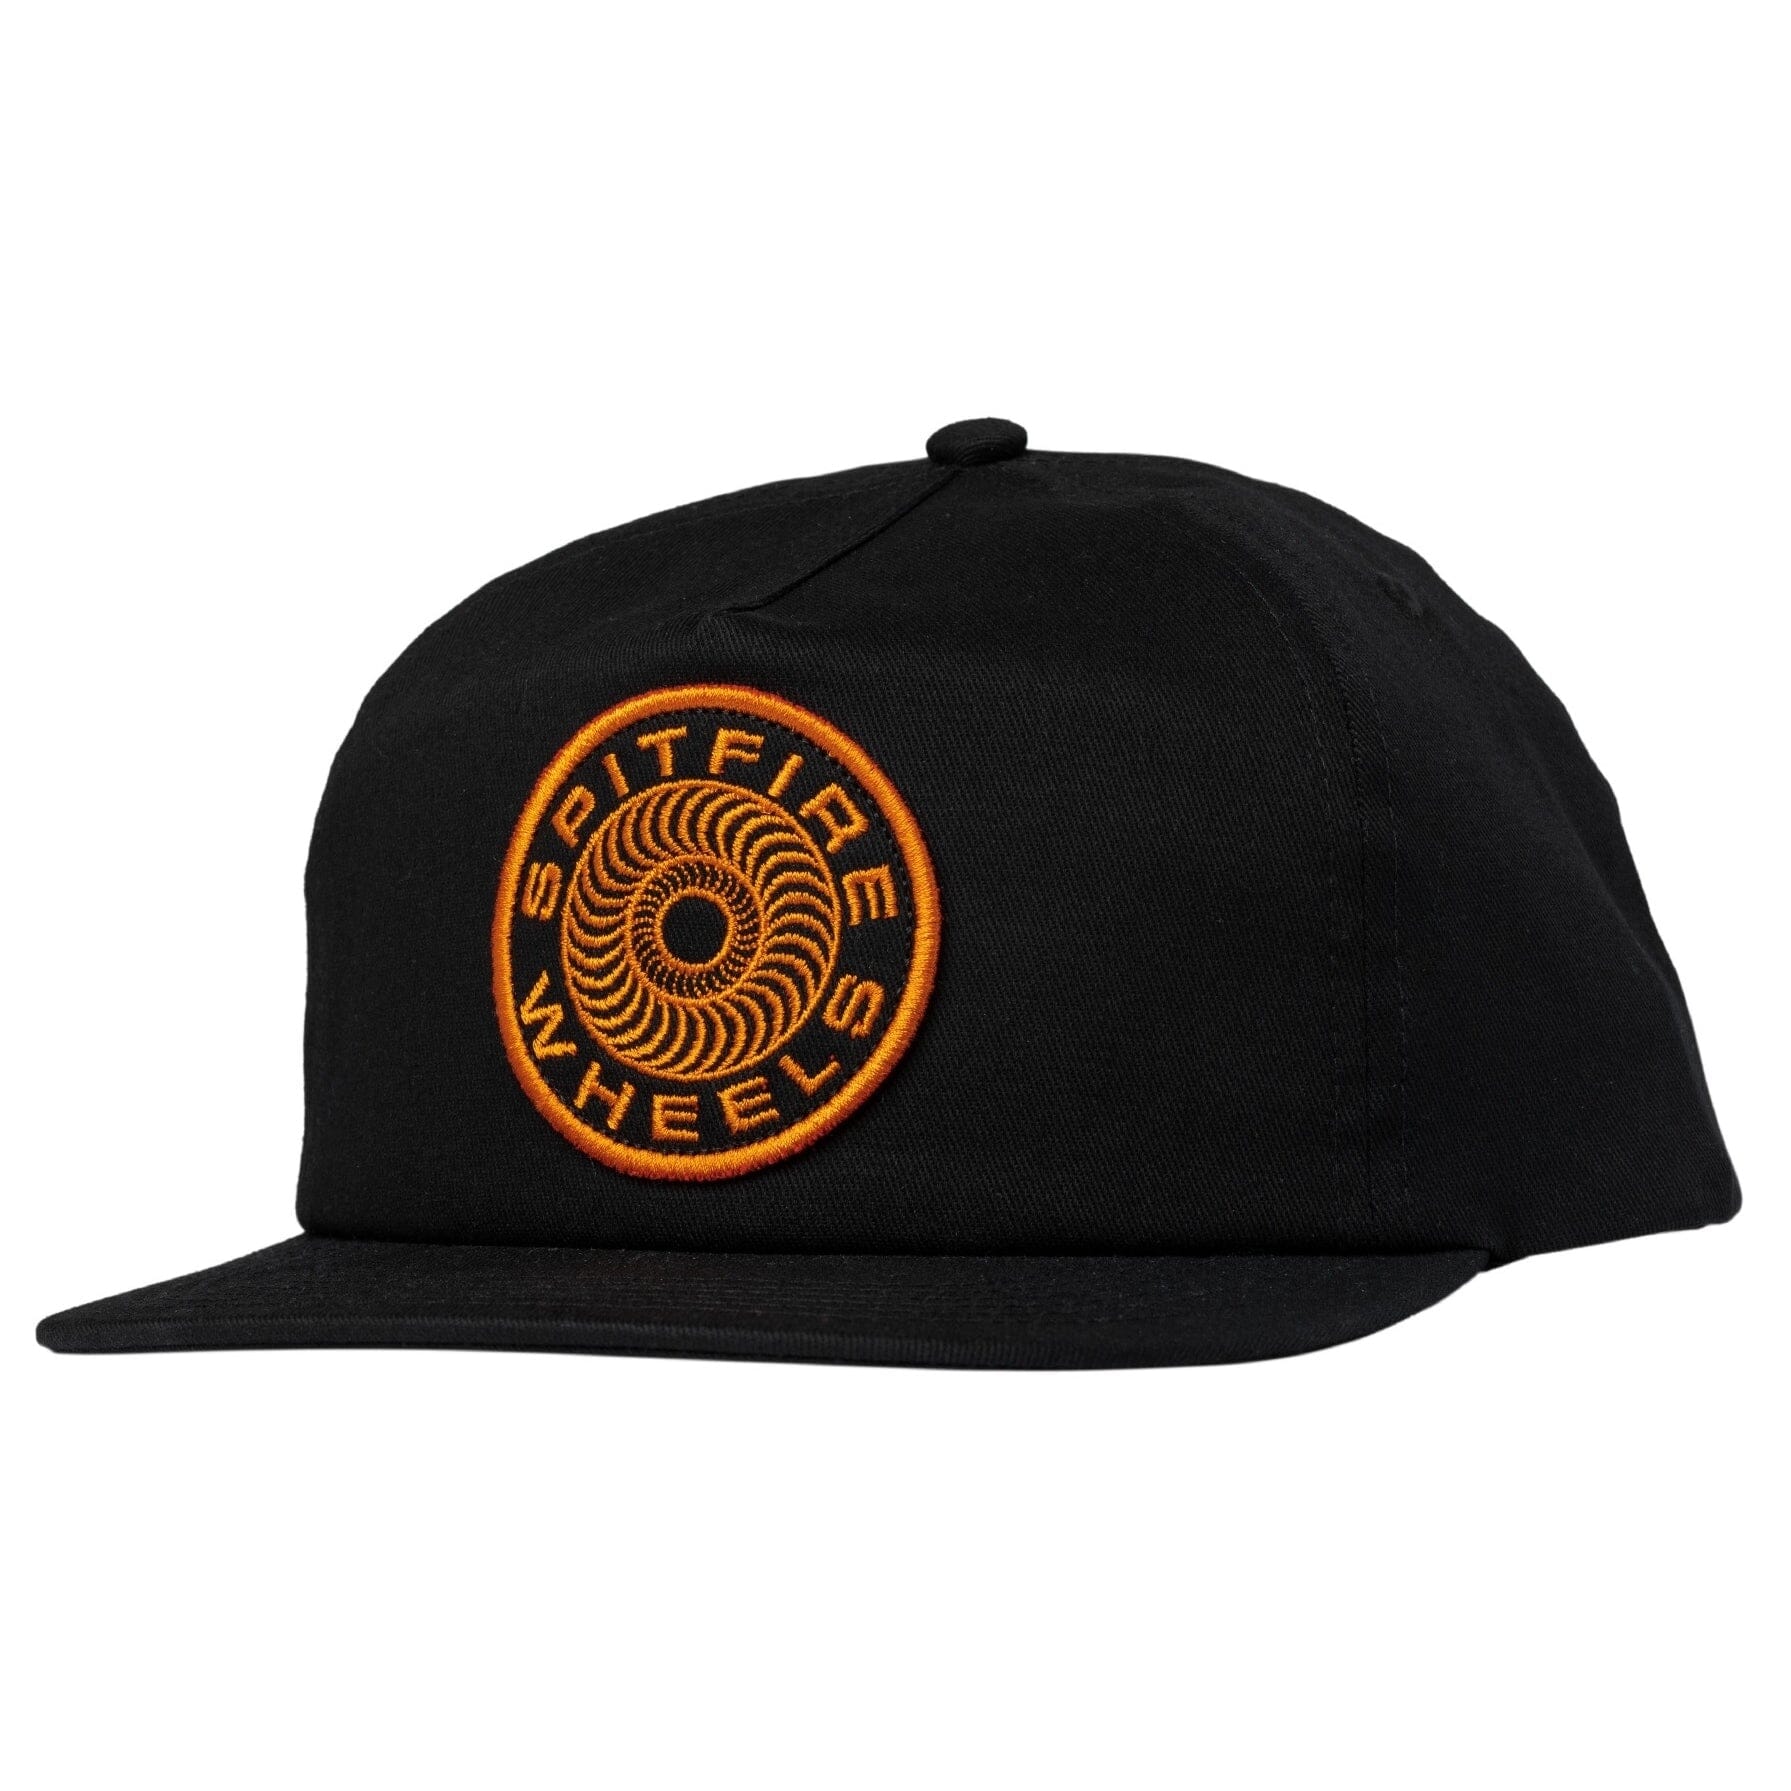 SPITFIRE Classic '87 Swirl Patch Snapback Hat Black/Orange Men's Hats Spitfire 